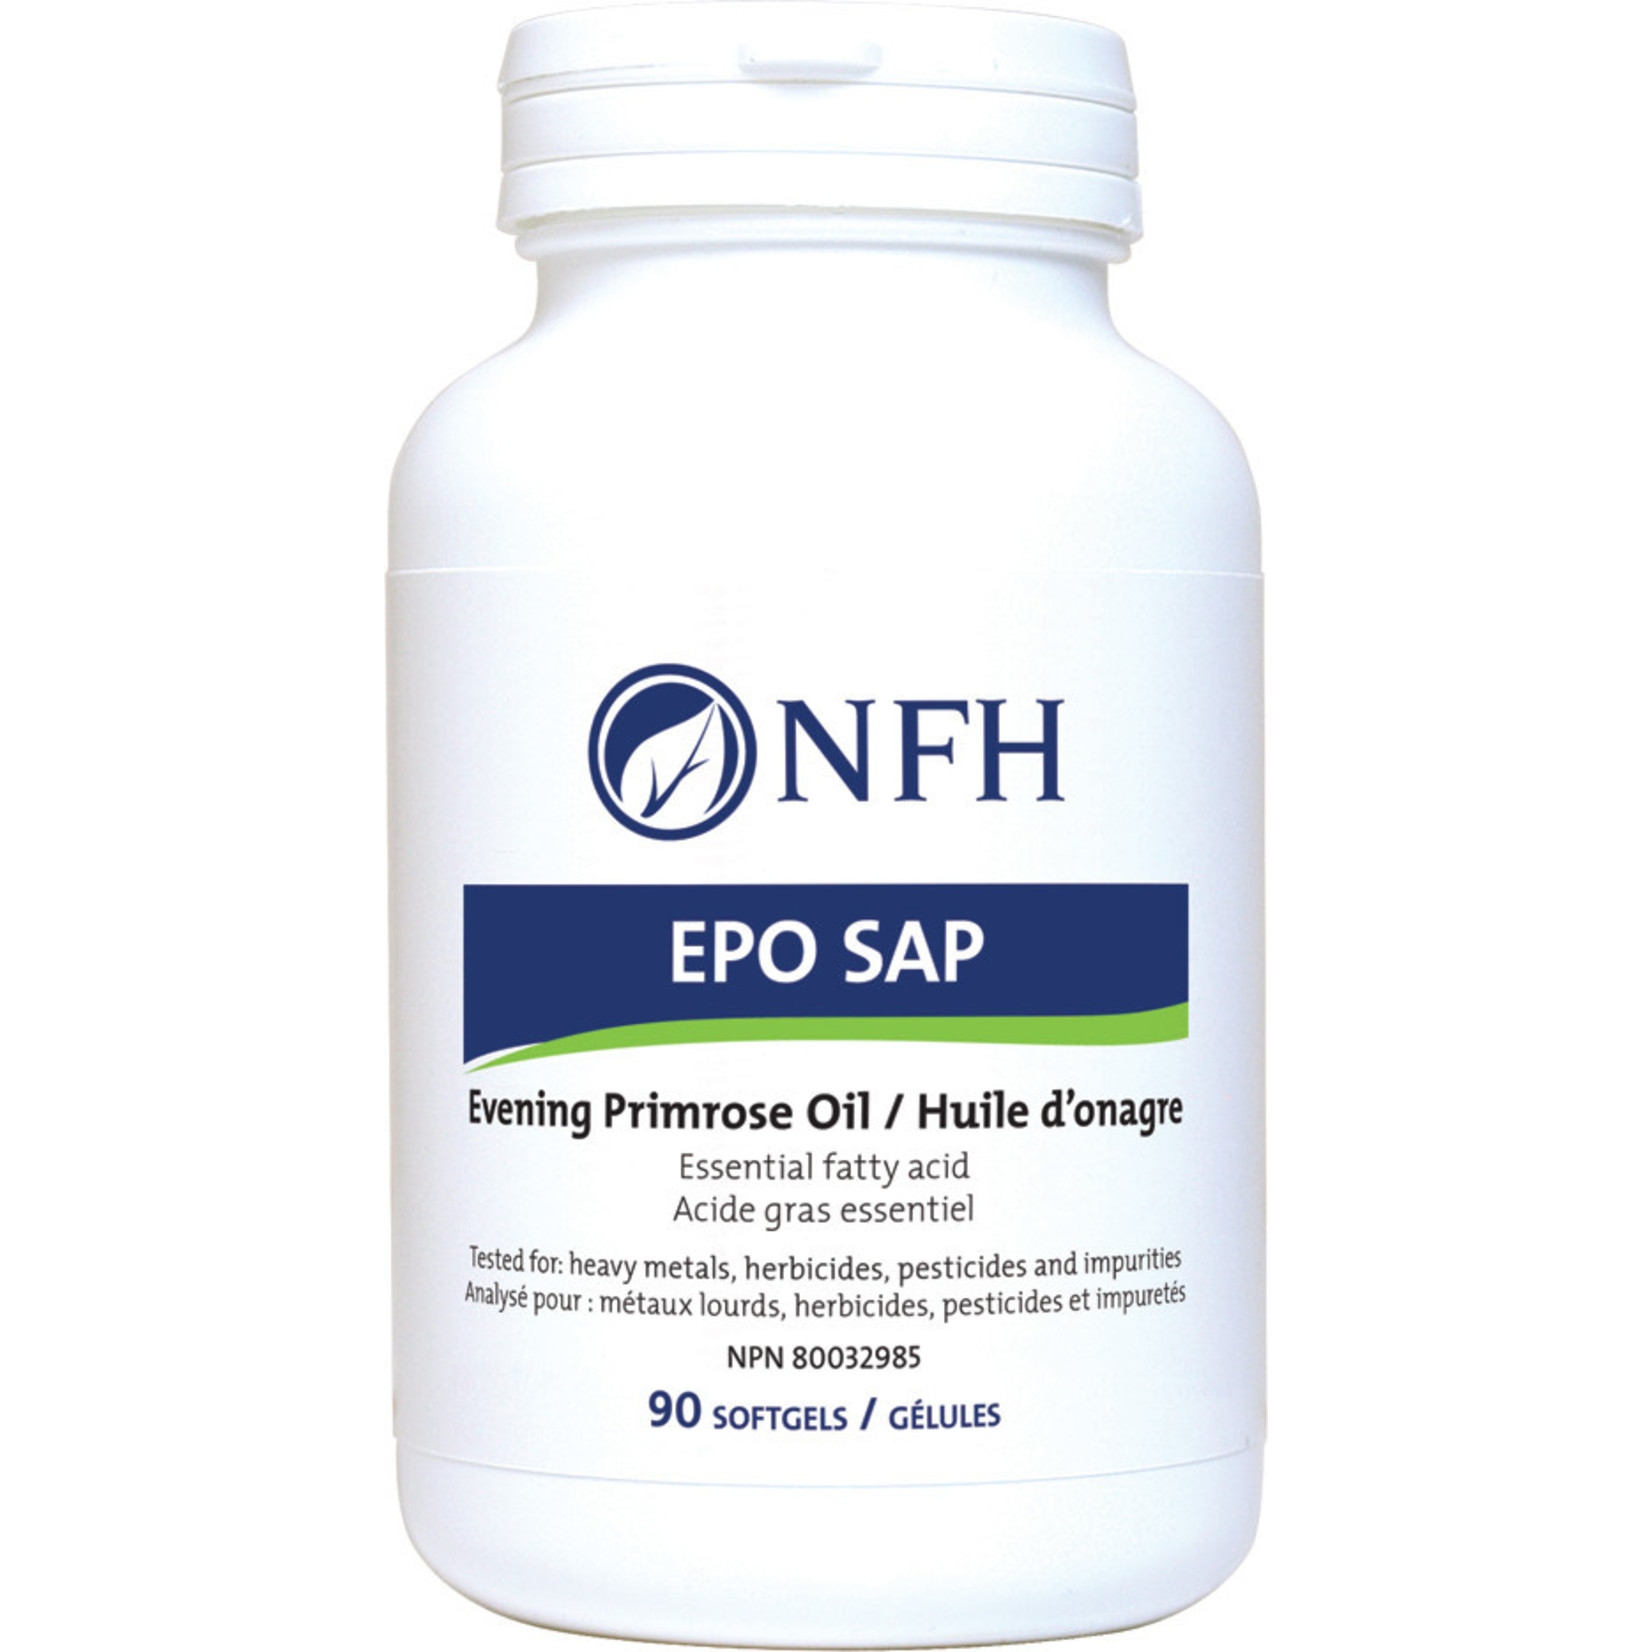 NFH NFH EPO (EVENING PRIMROSE OIL) SAP 90 SOFTGELS